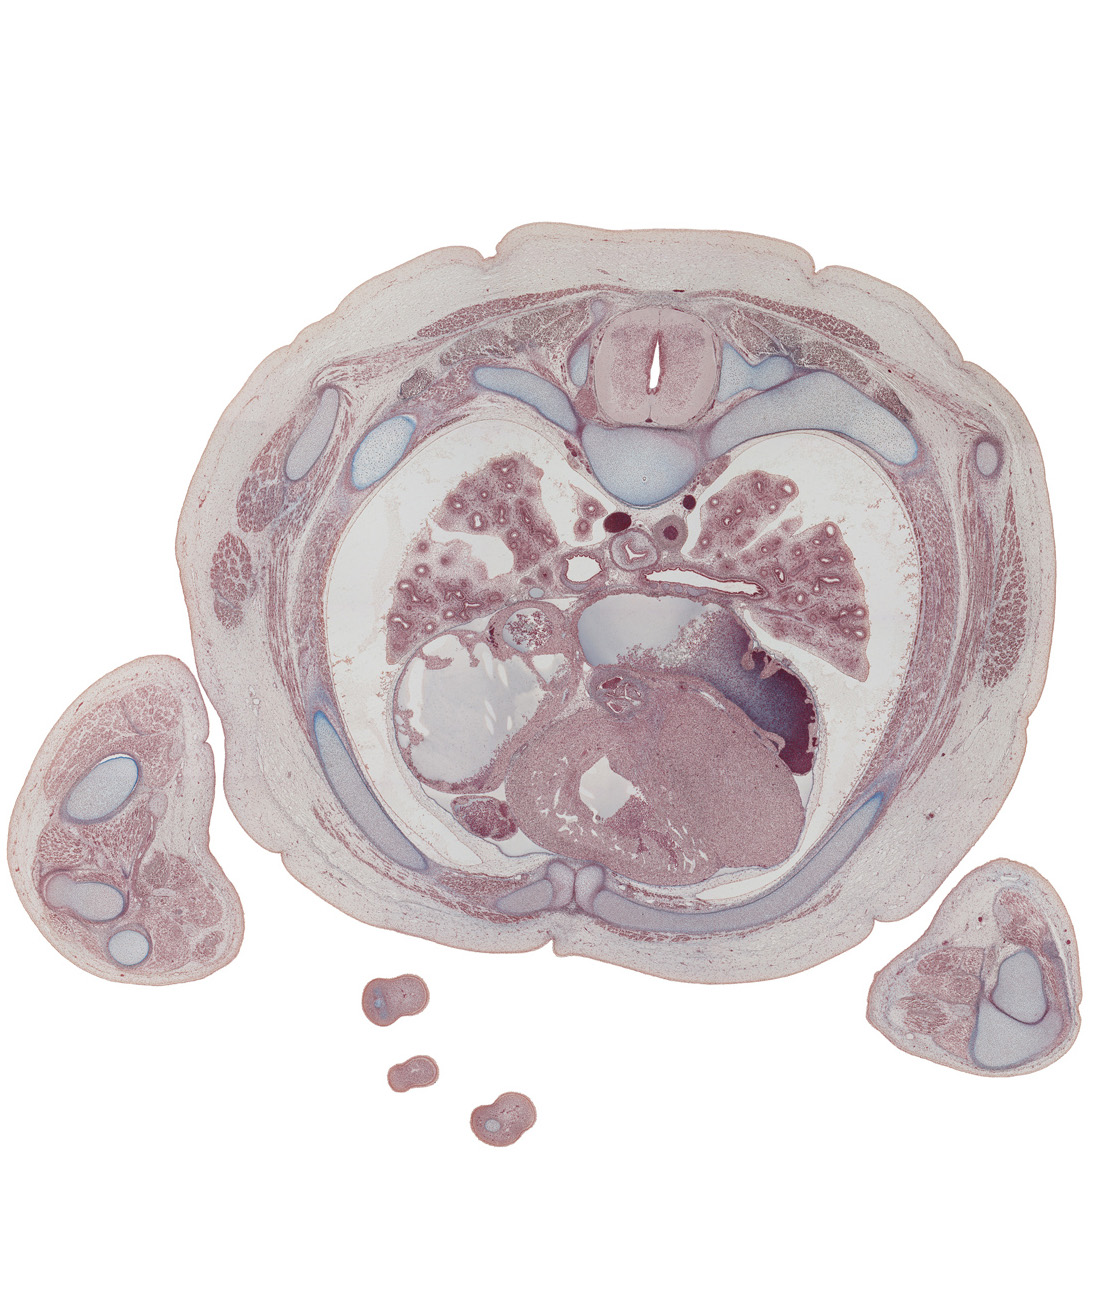 T-4 / T-5 interganglion region, anterior interventricular sulcus, aortic semilunar valve, azygos vein, caudal edge of scapula, edge of distal phalynx of digit 4 (ring finger), external intercostal muscle(s), horizontal fissure, interatrial septum, internal intercostal muscle(s), left atrium, left coronary artery, lower lobe of left lung, lower lobe of right lung, middle lobe of right lung, oblique fissure, rib 4 (costal cartilage), rib 5, serratus anterior muscle, sinus venarum, superior lingular segmental bronchus of left lung, upper lobe of left lung, upper lobe of right lung